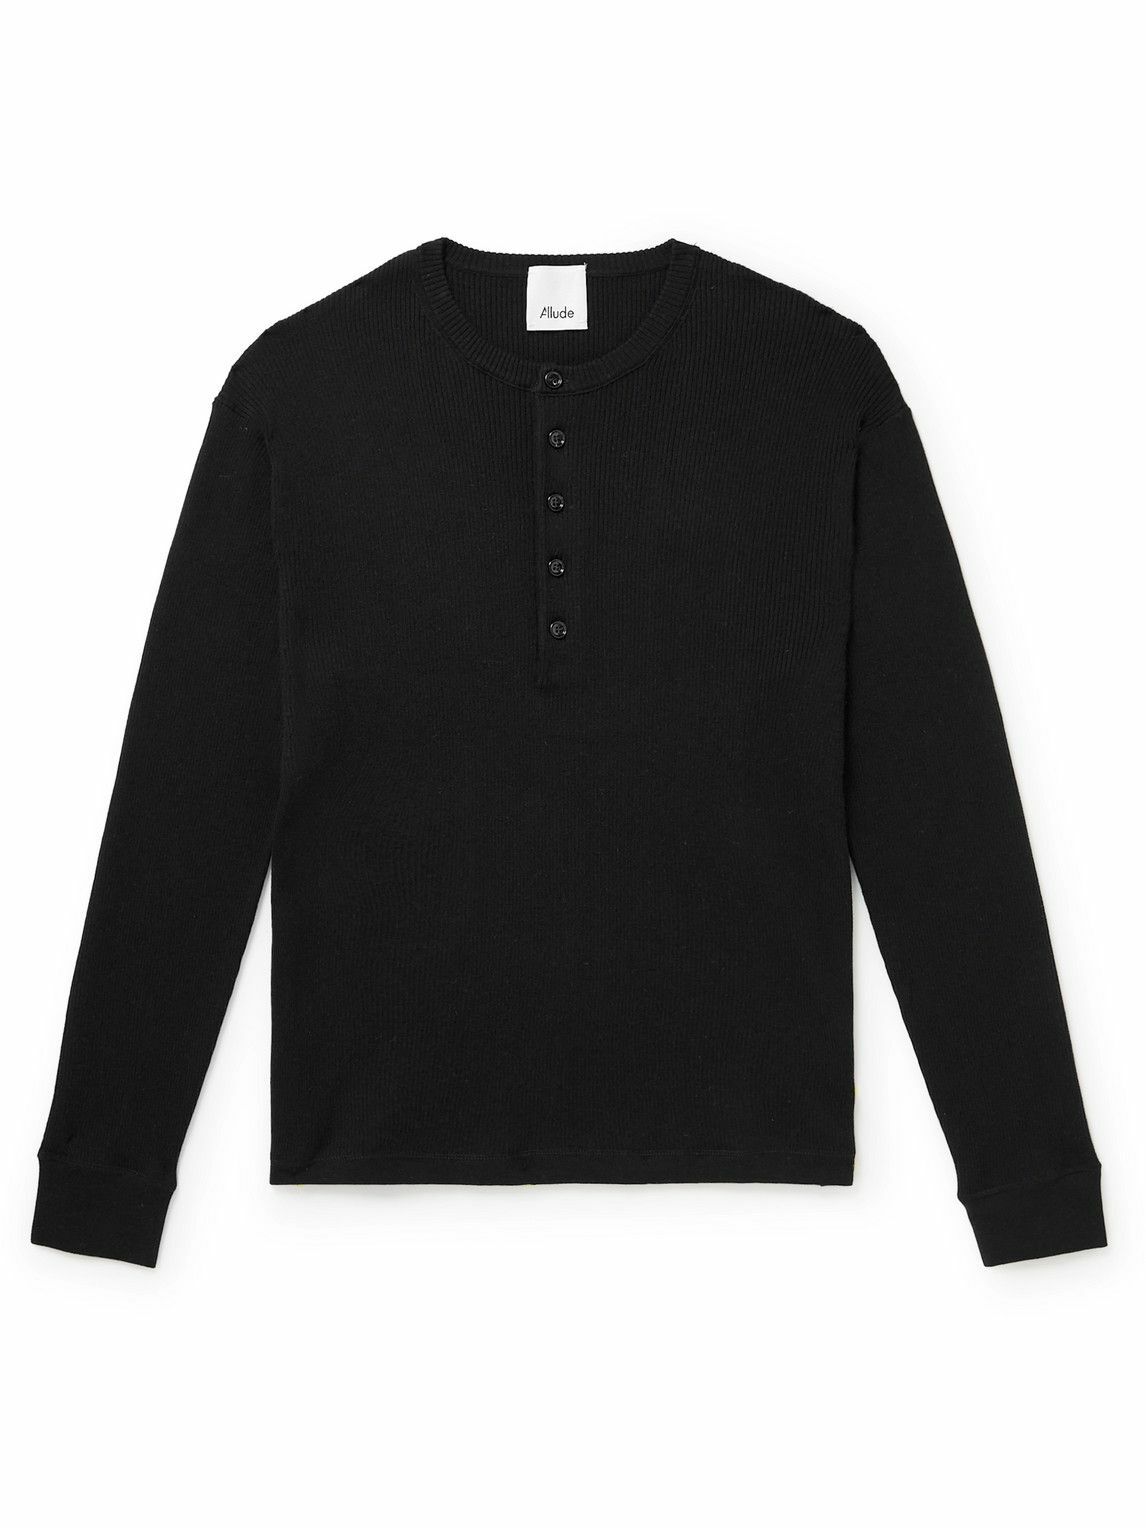 Photo: Allude - Serafino Ribbed Cotton and Cashmere-Blend Sweater - Black